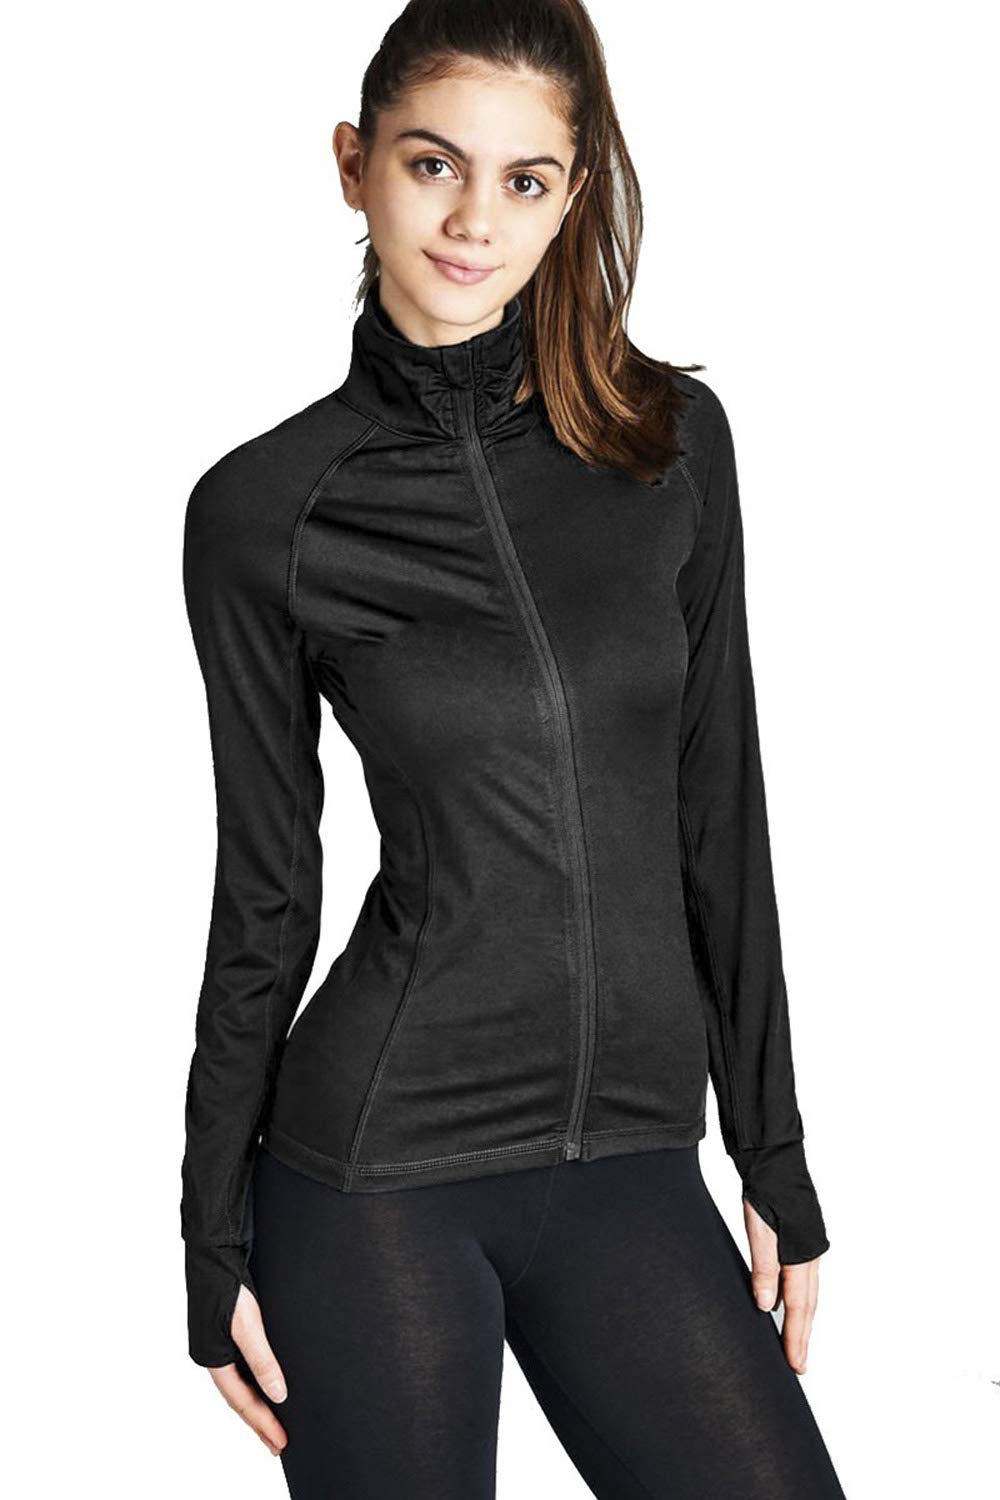 Women's Long Sleeve Zip up Athletic wear sweater Work Out Gym jacket –  Khanomak